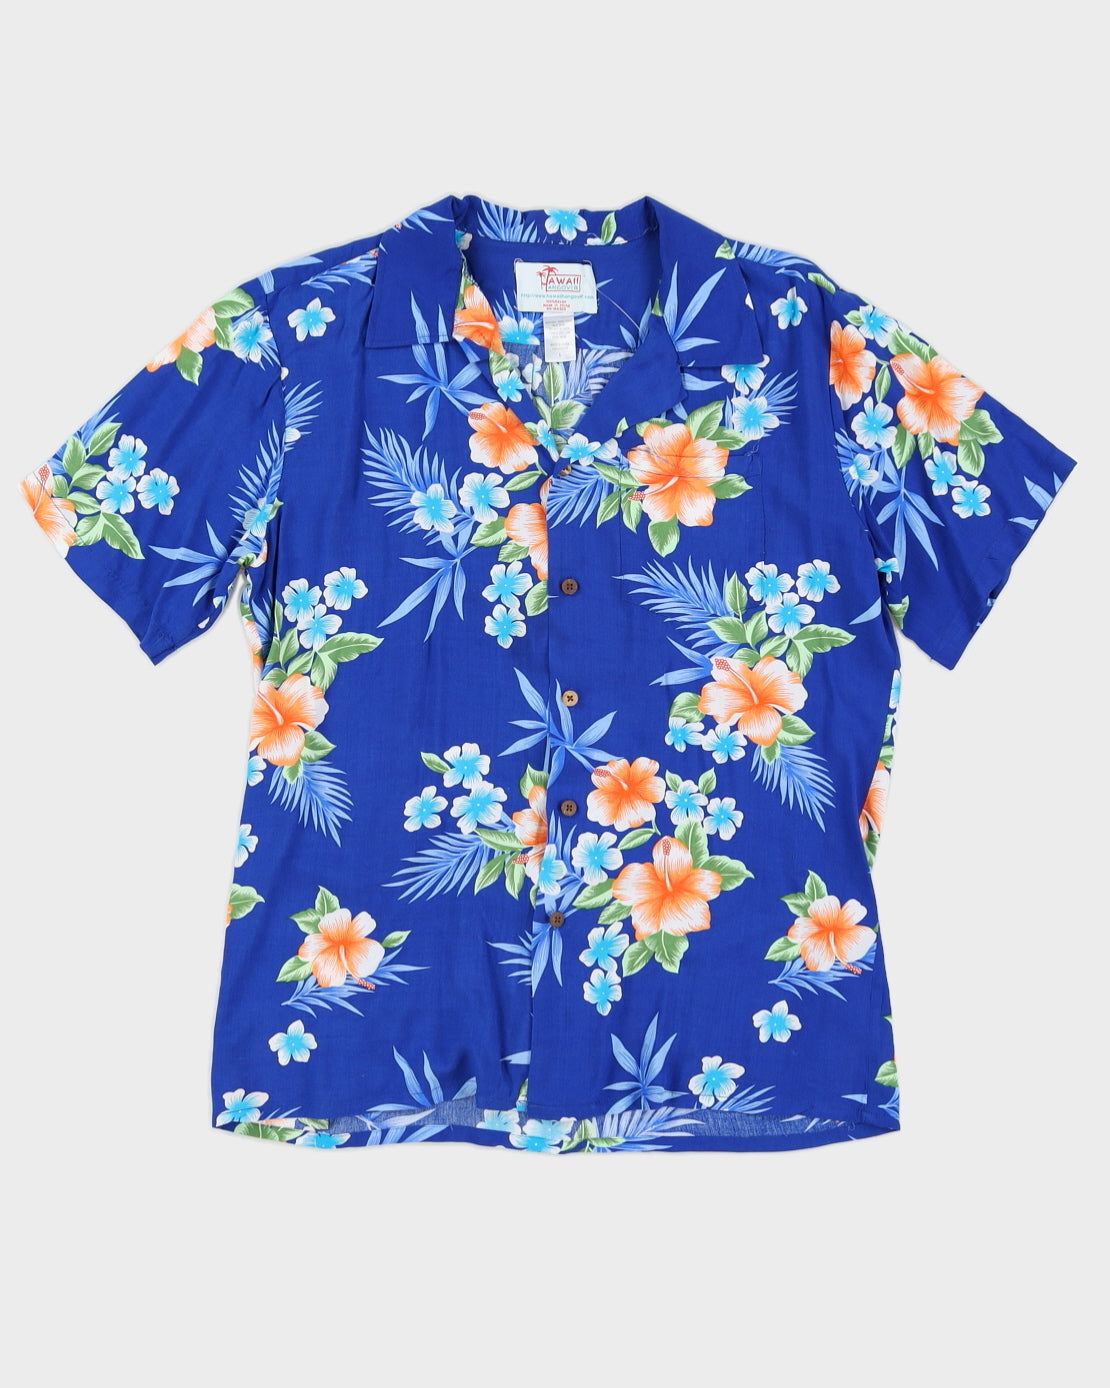 Blue Patterned Hawaiian Shirt - XL